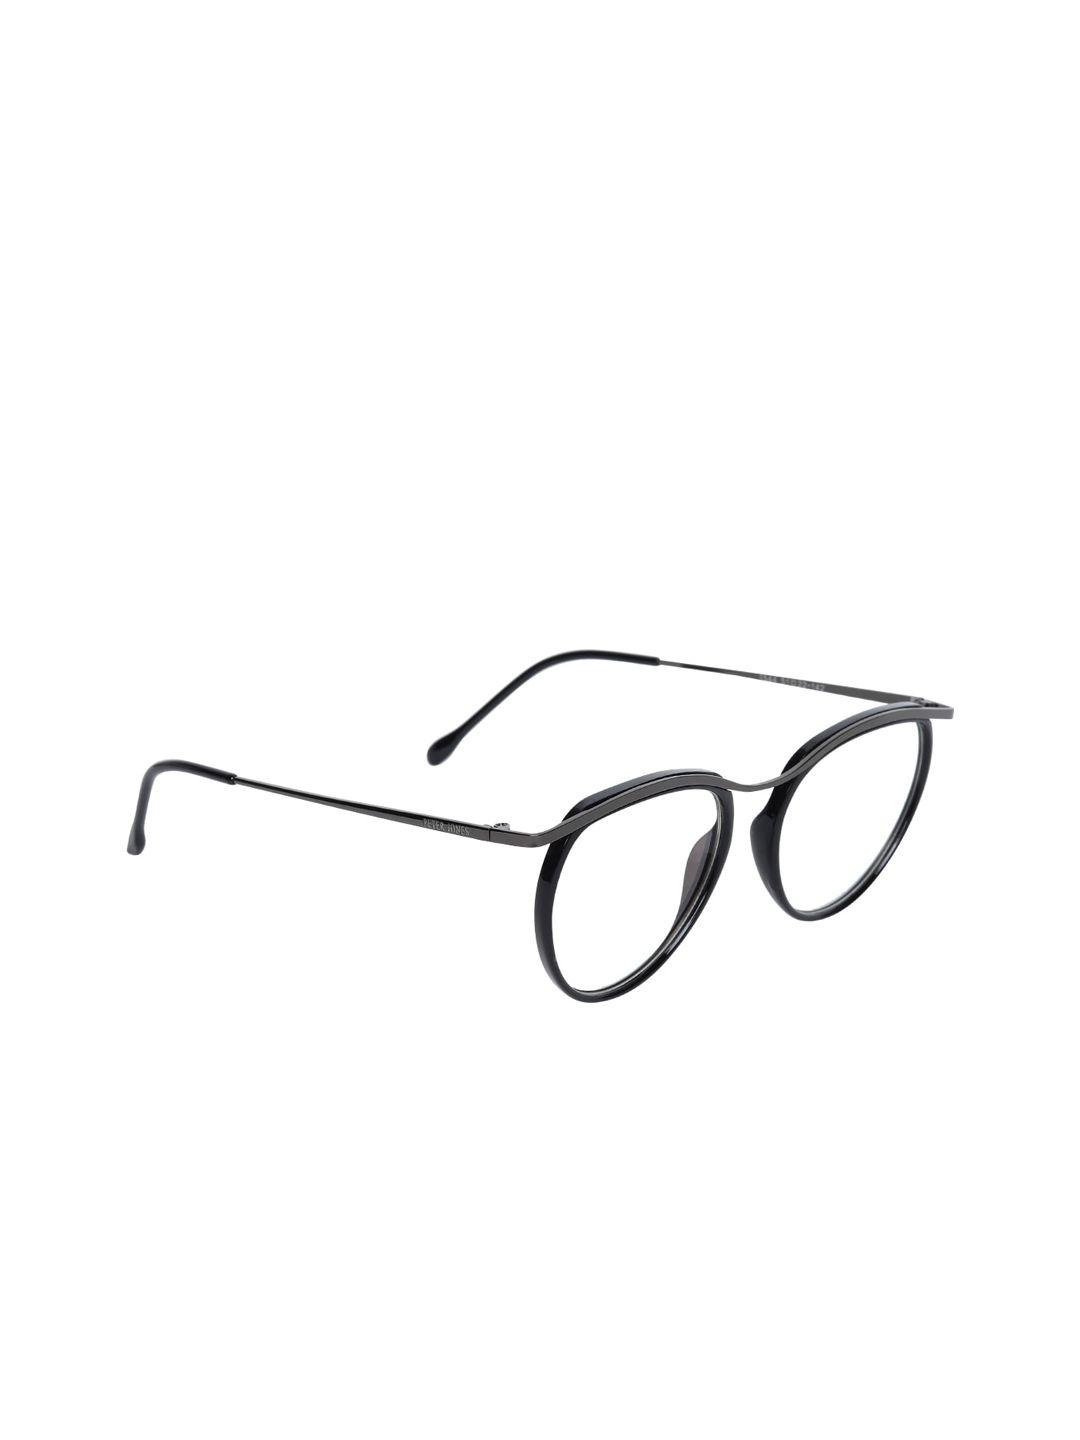 peter jones eyewear unisex black solid full-rim cateye frames-1544b